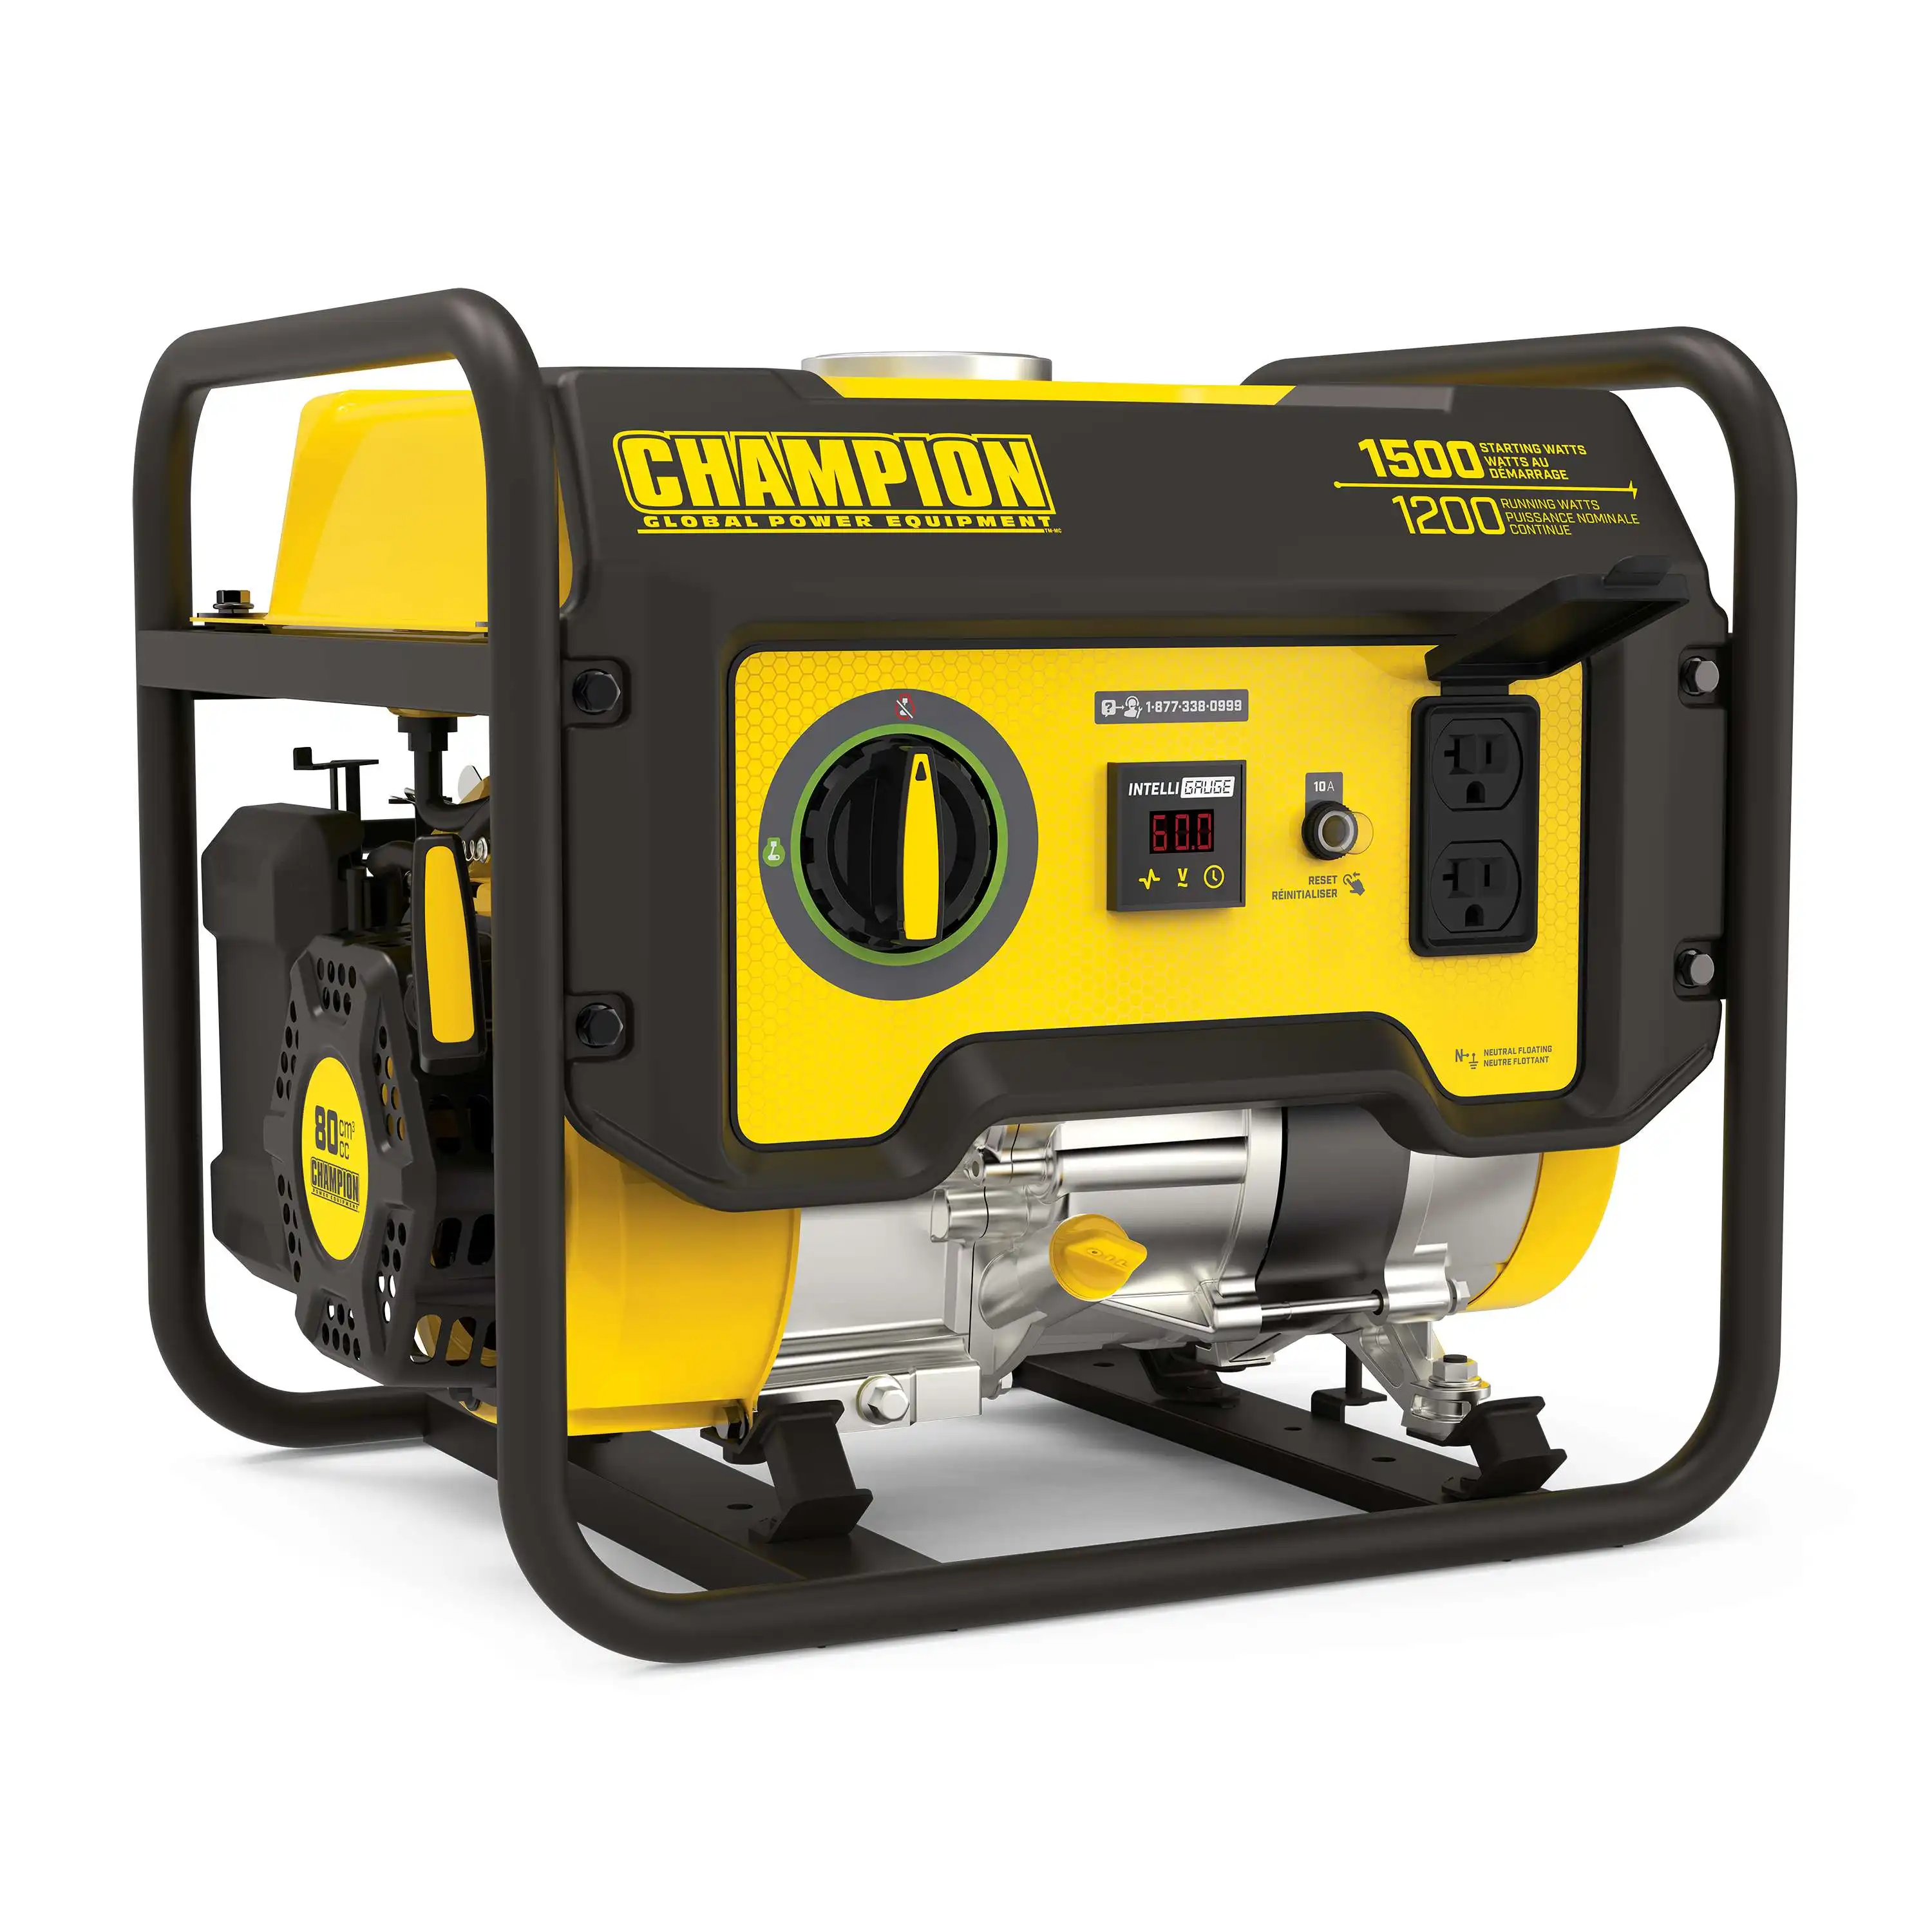 Wholesale Discount price for Champion 2000W Portable Generator